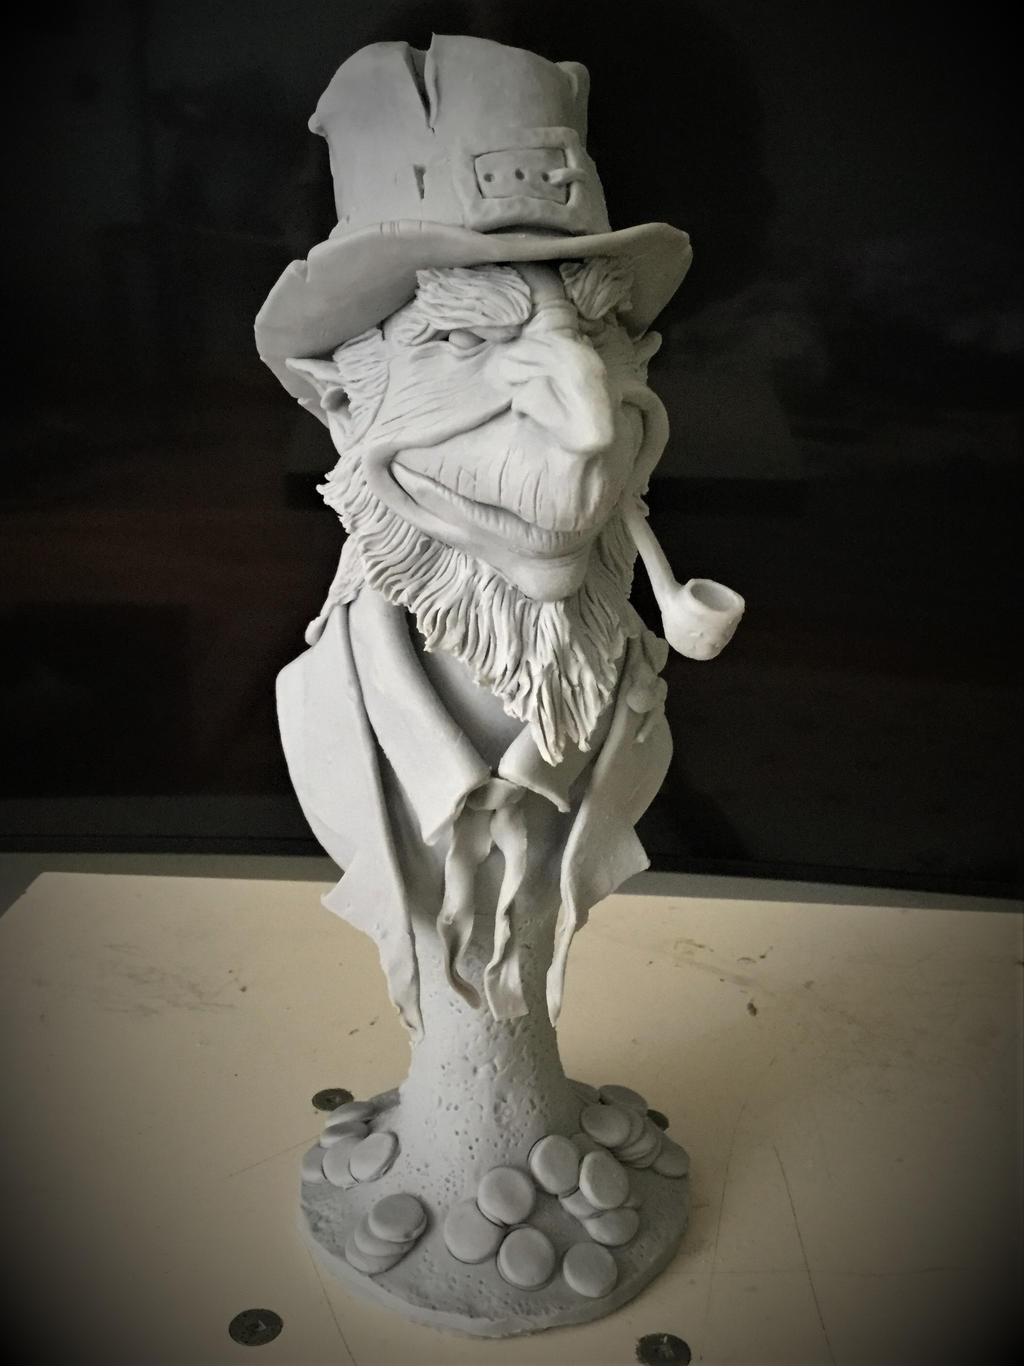 Leprechaun bust by Blairsculpture on DeviantArt